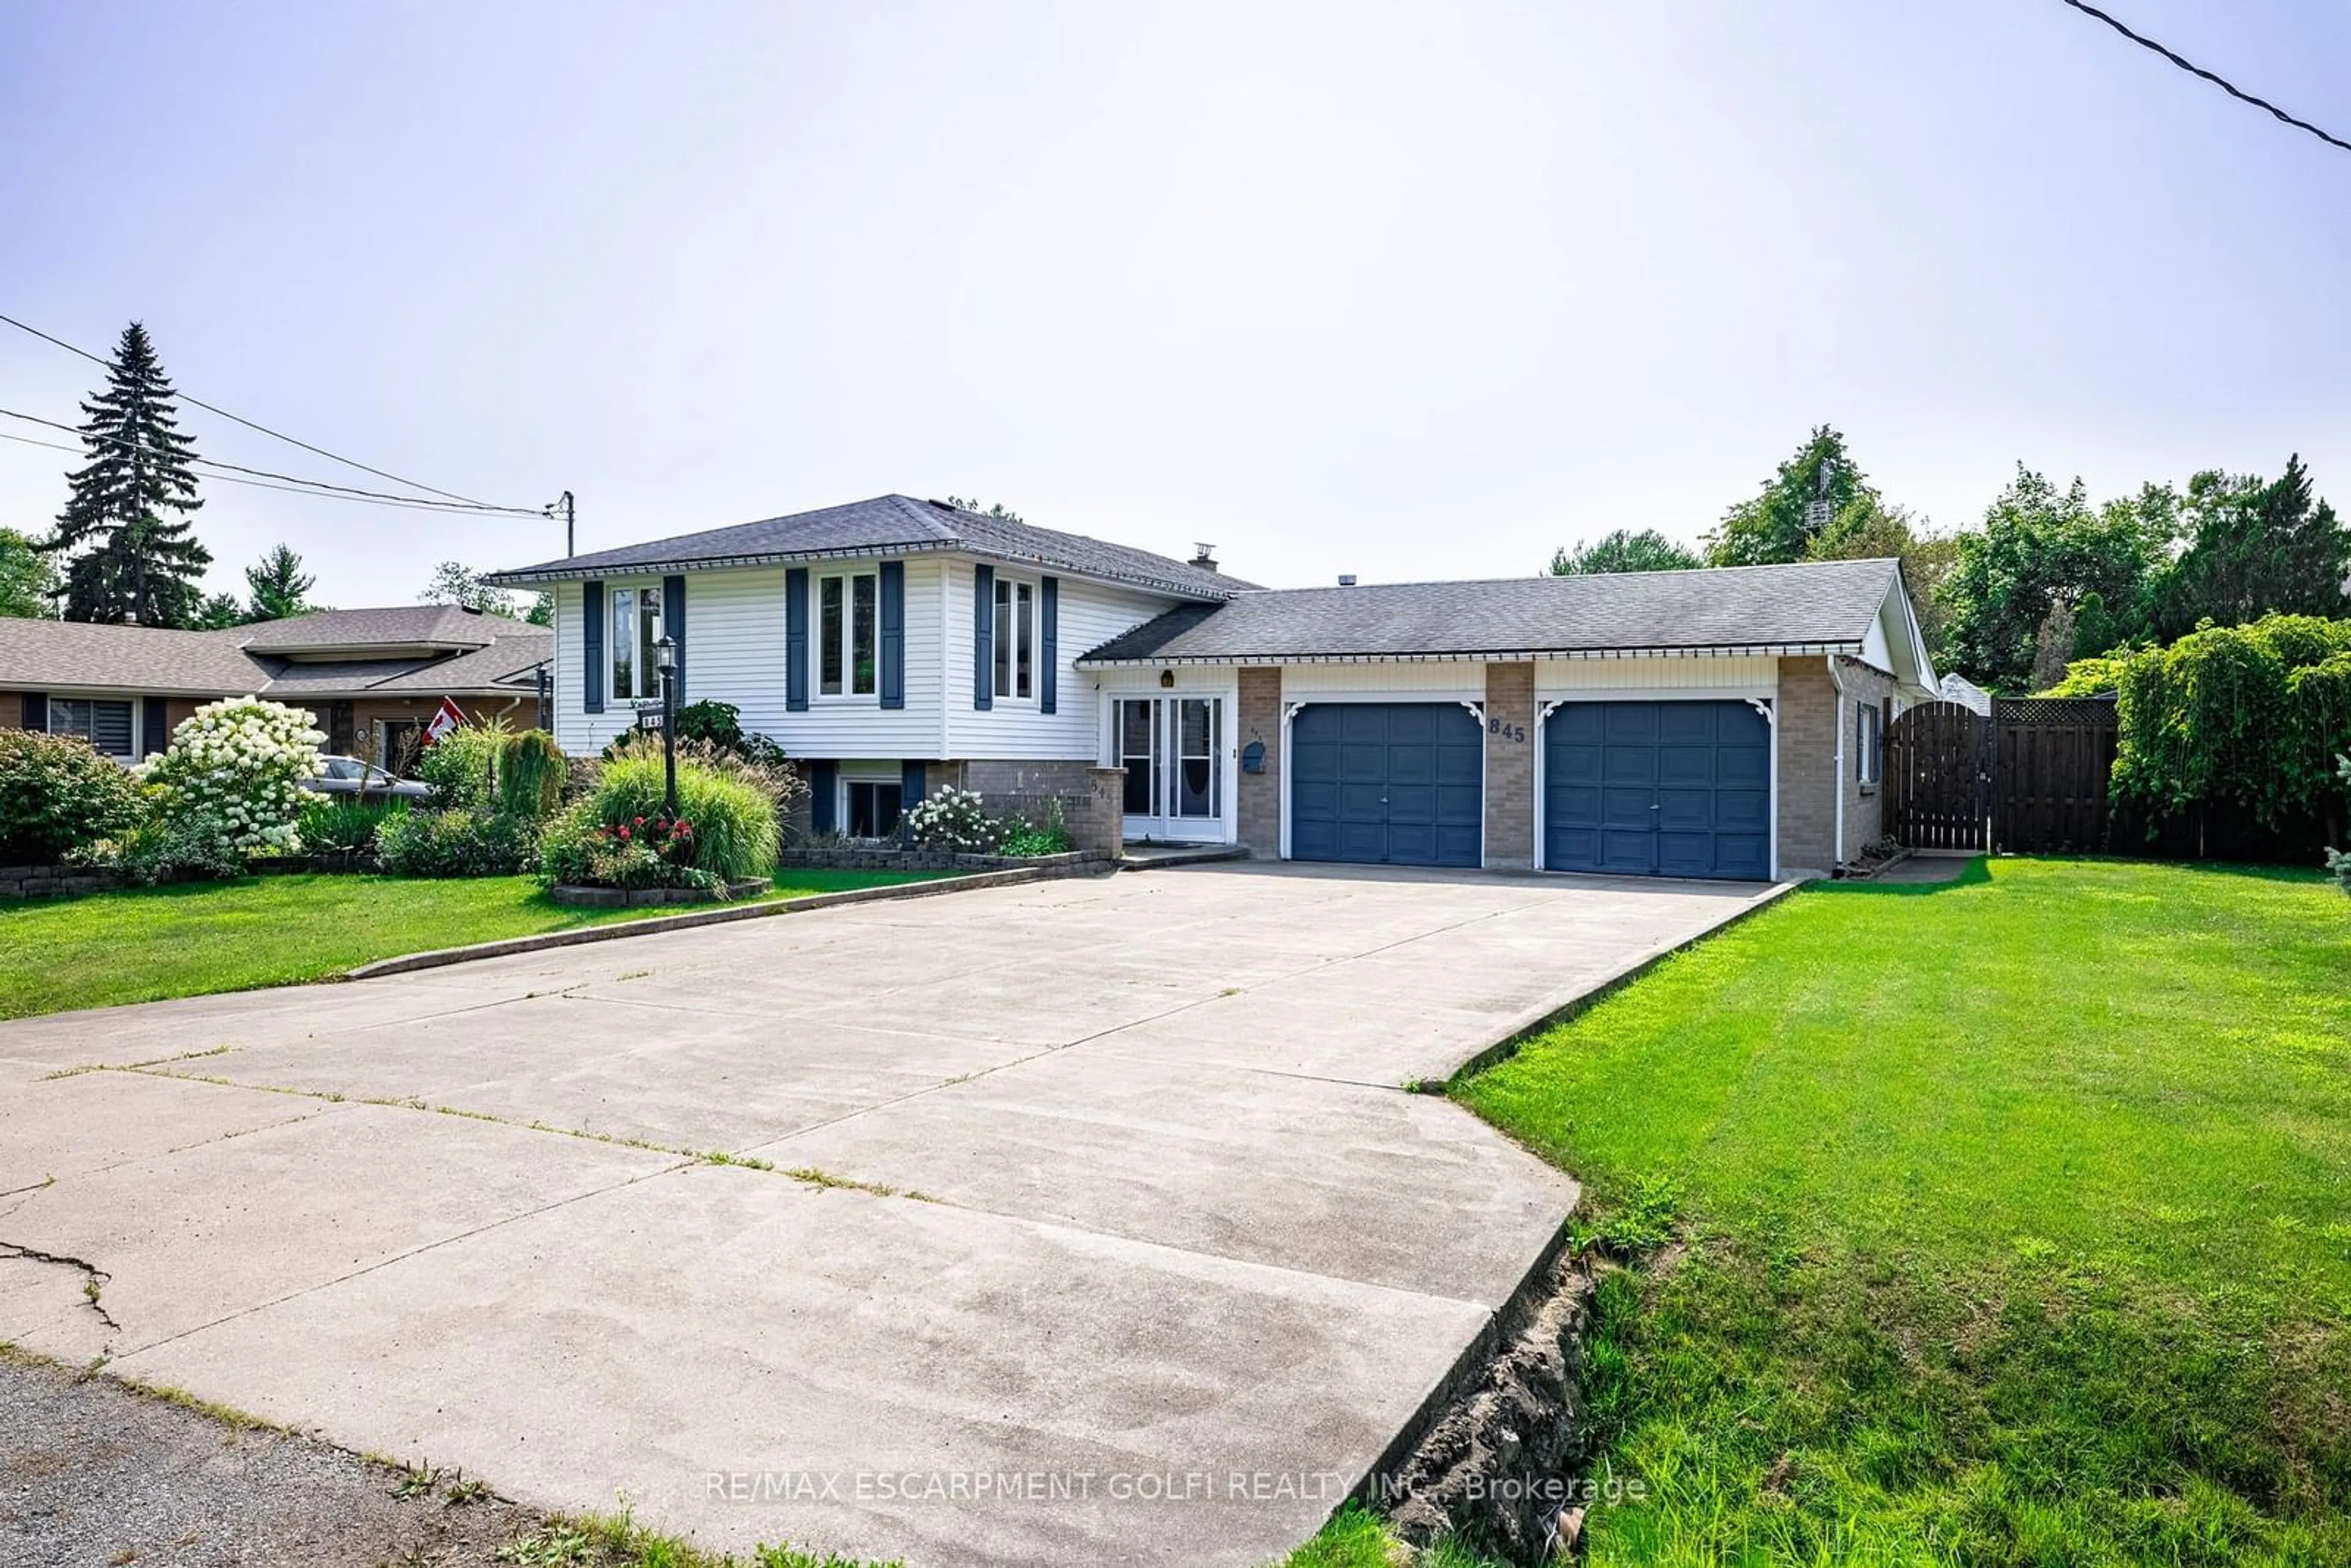 Frontside or backside of a home for 845 Grandview Rd, Fort Erie Ontario L2A 4V6